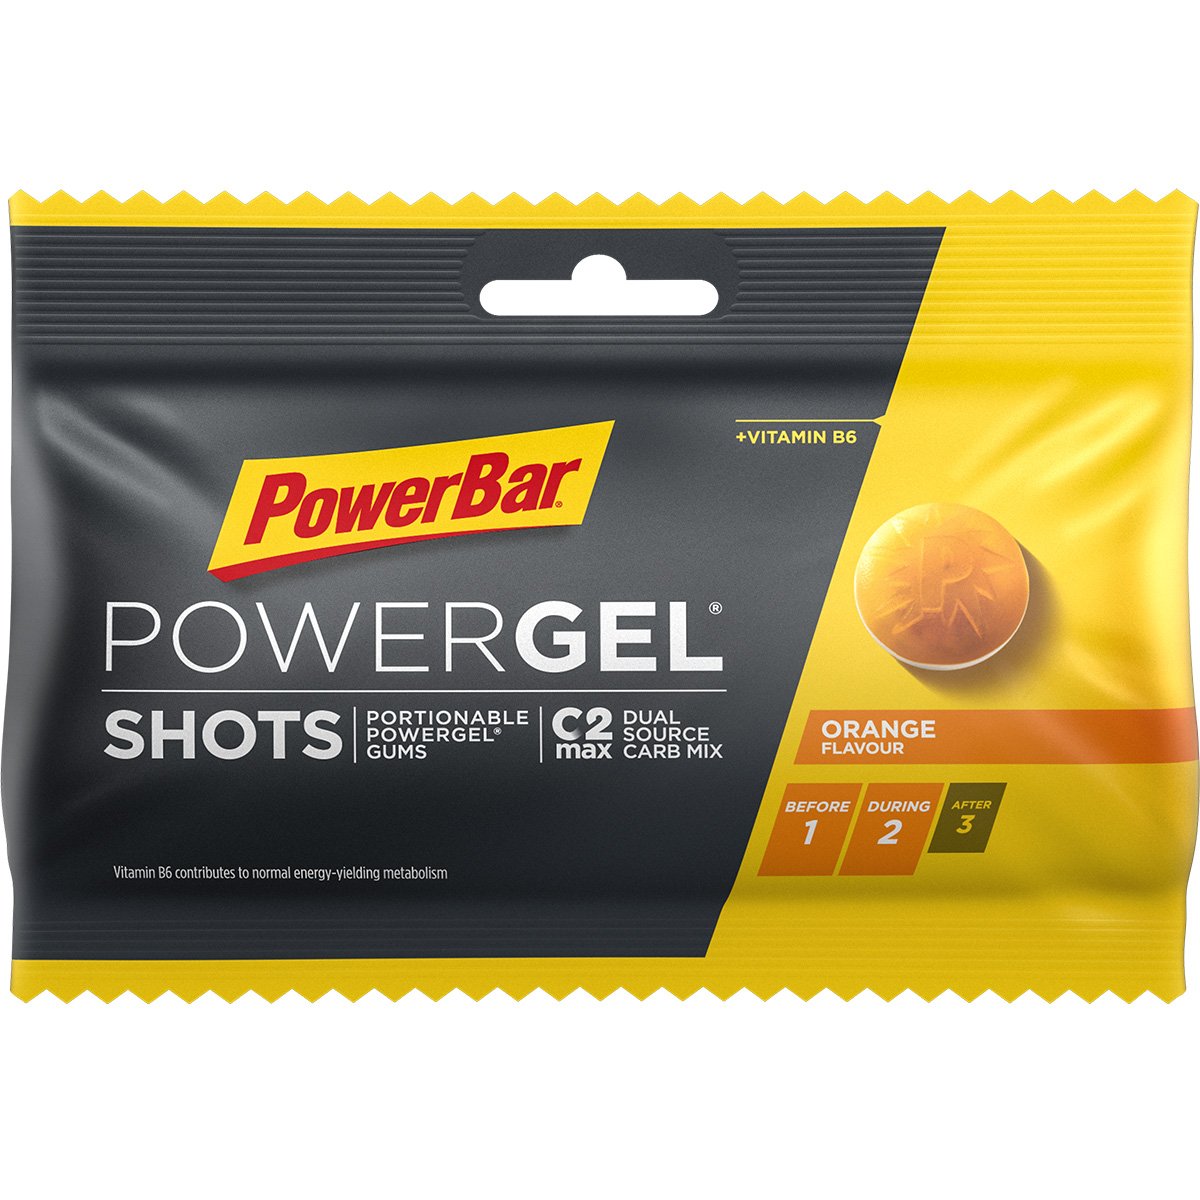 PowerBar - Powergel shots | shots and chews